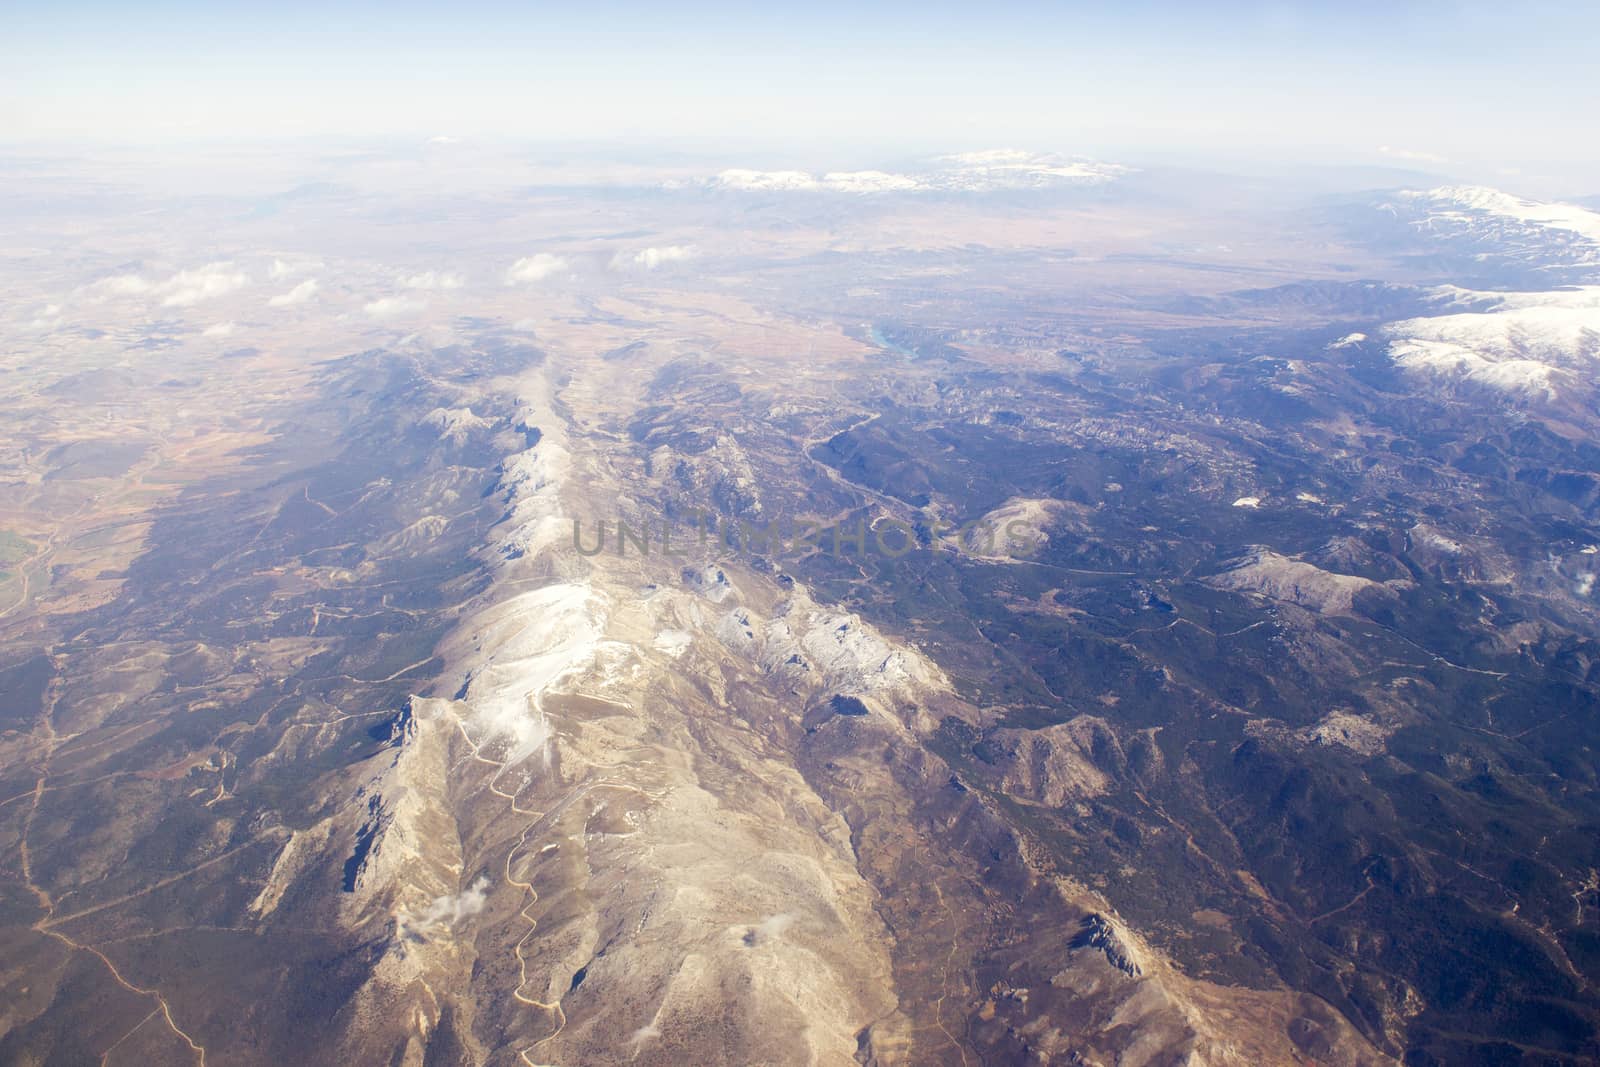 Aerial view of Sierra Nevada in Spain by miradrozdowski